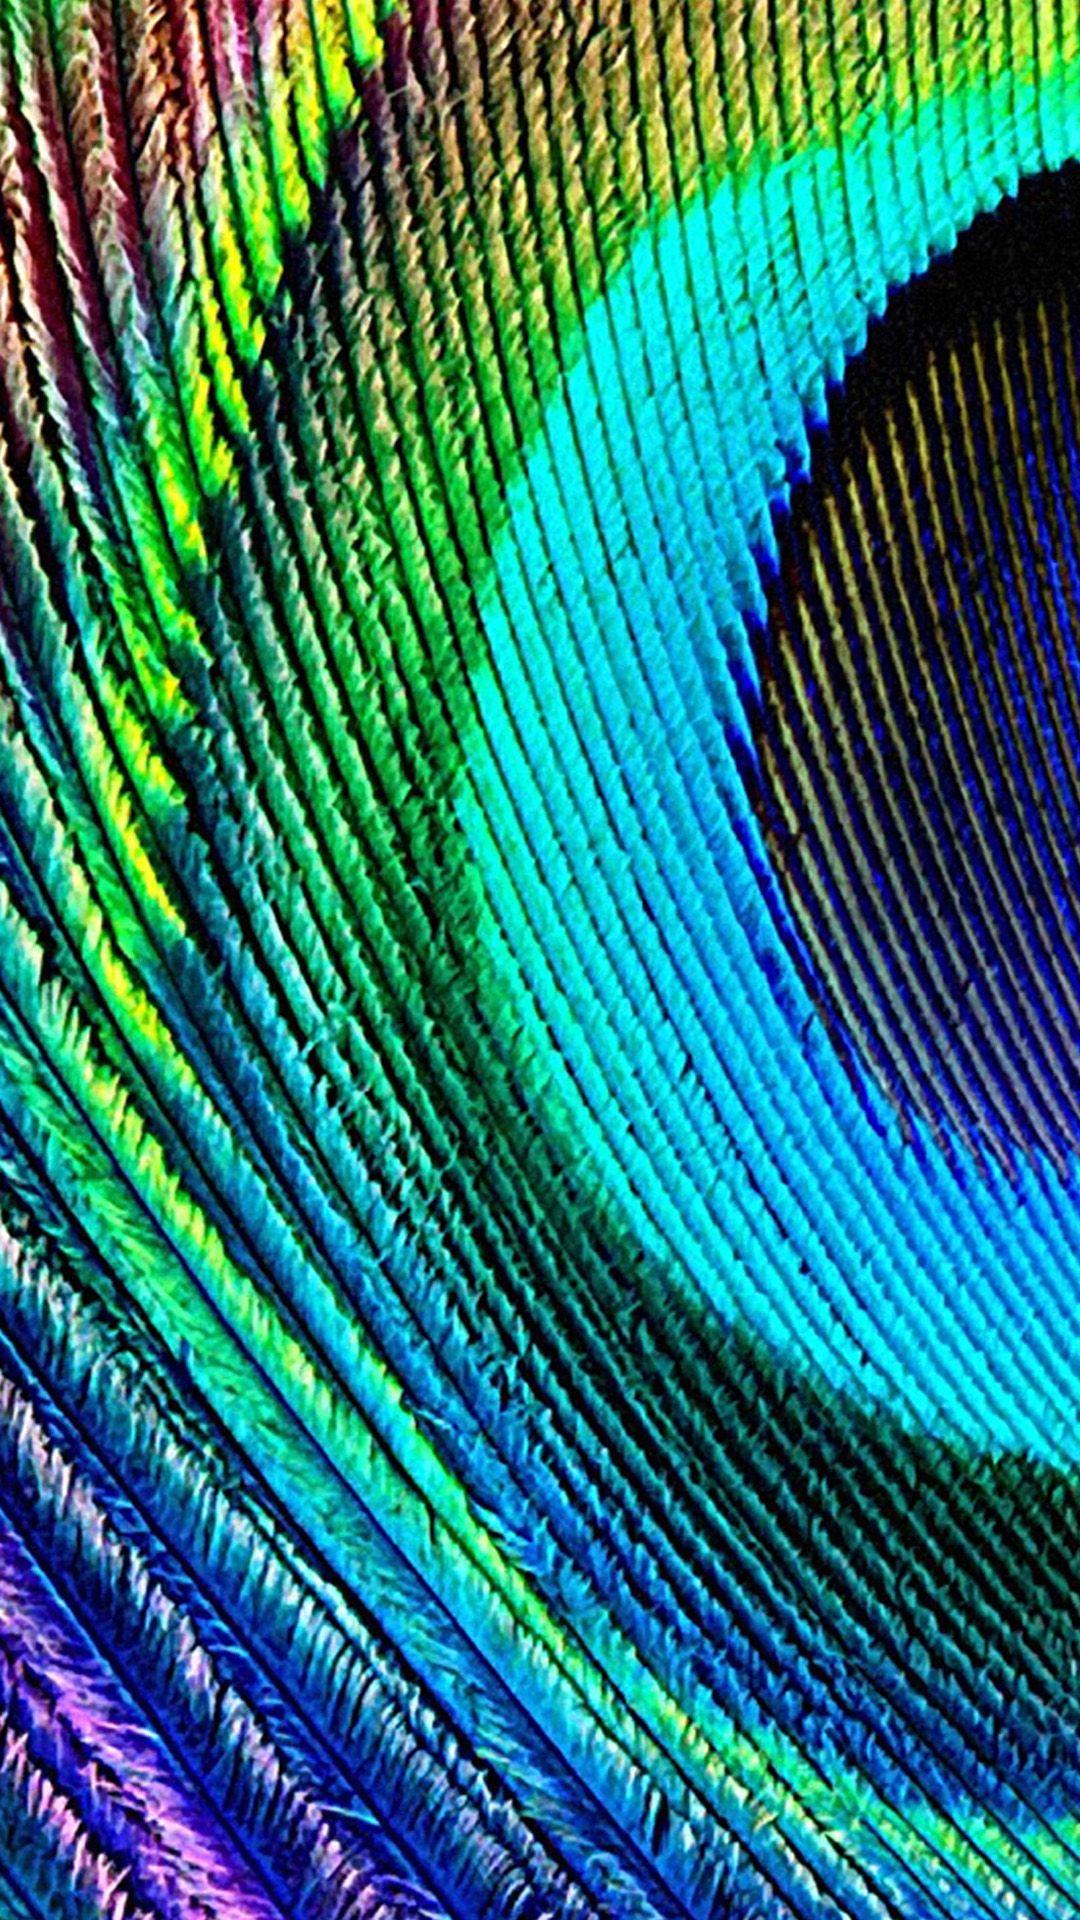 Peacock feather 2 Samsung Wallpaper, Samsung Galaxy S Galaxy S4